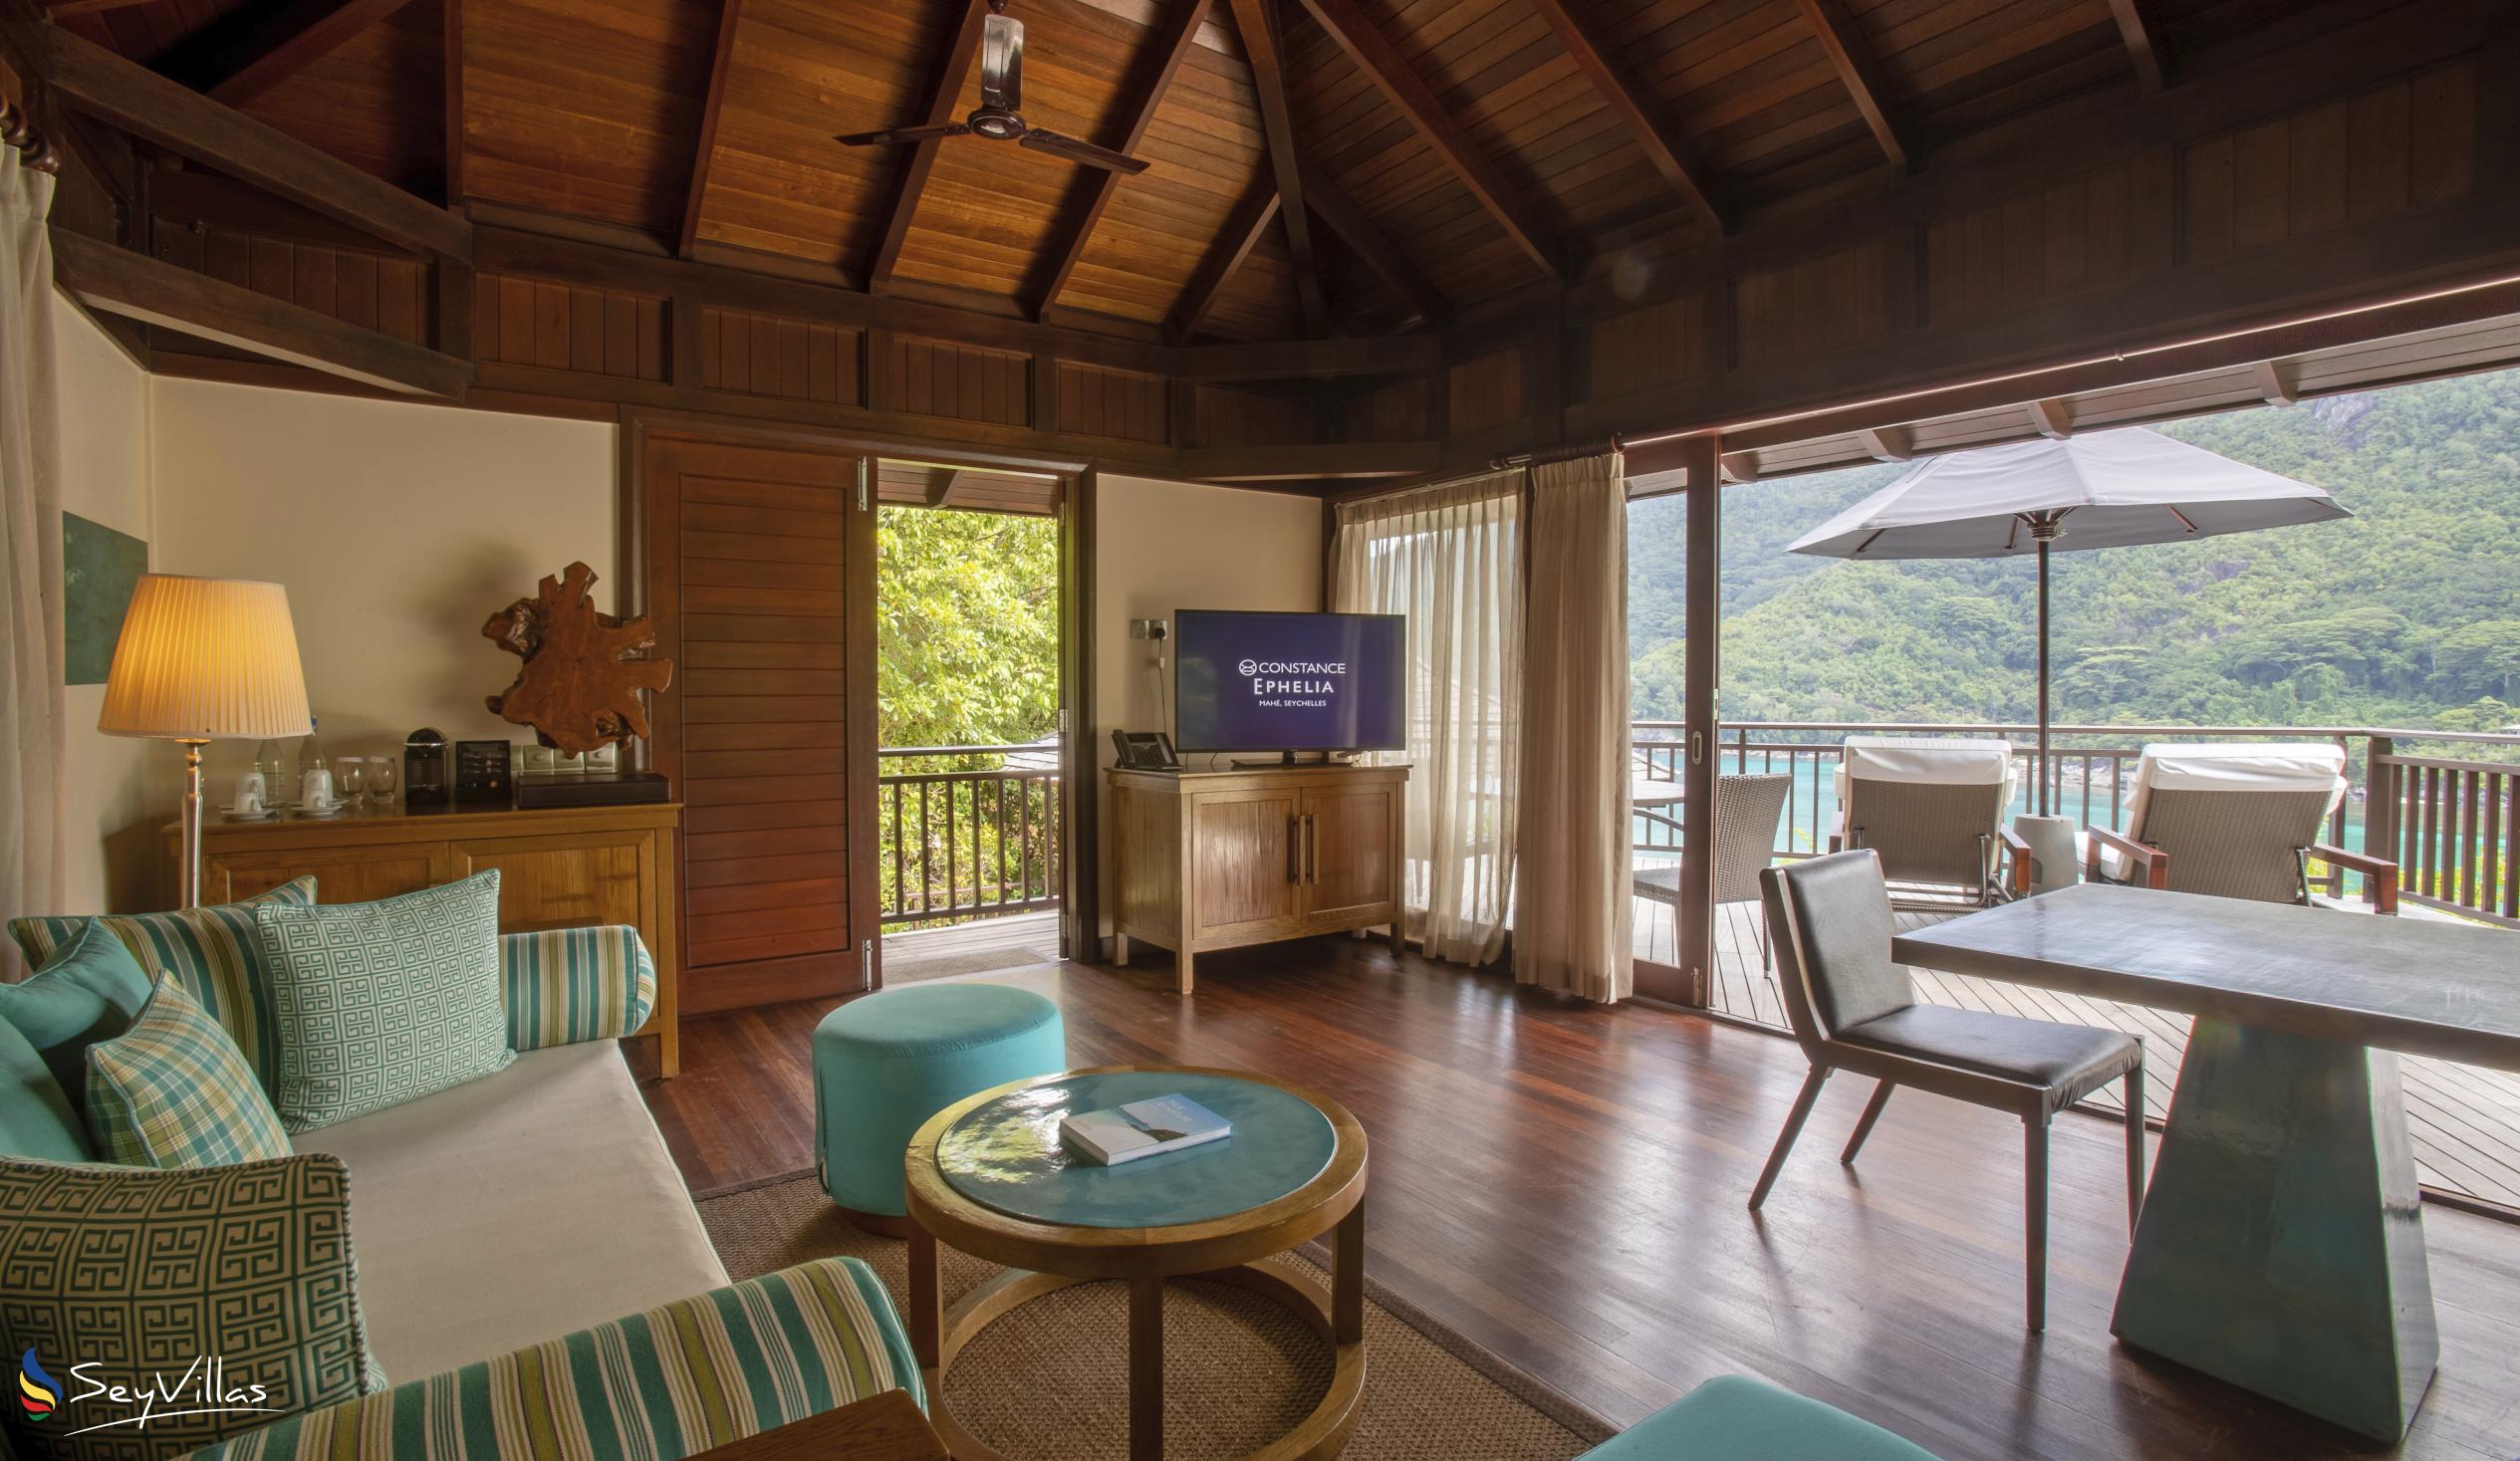 Photo 129: Constance Ephelia Seychelles - 1-Bedroom Hillside Villa - Mahé (Seychelles)